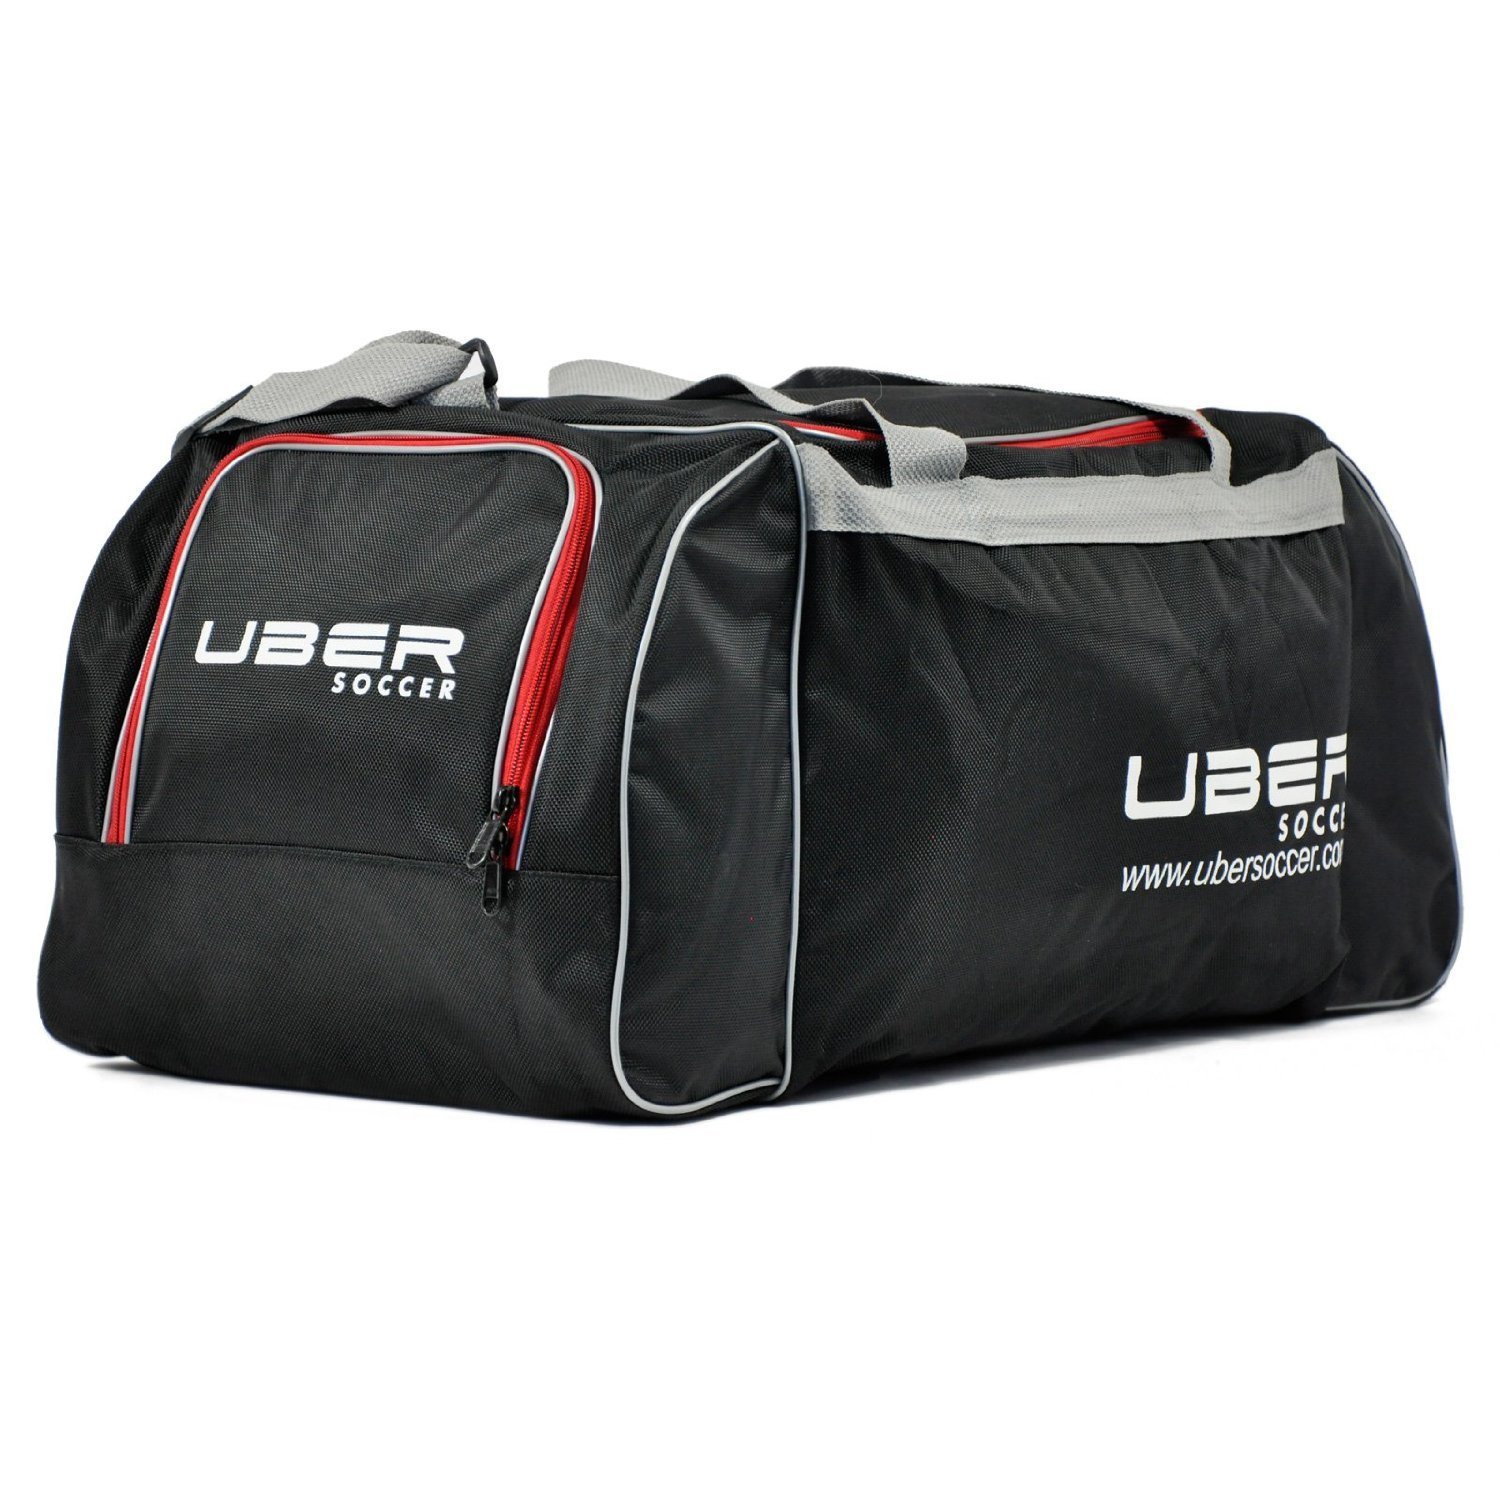 Uber Soccer Player Bag Pro 